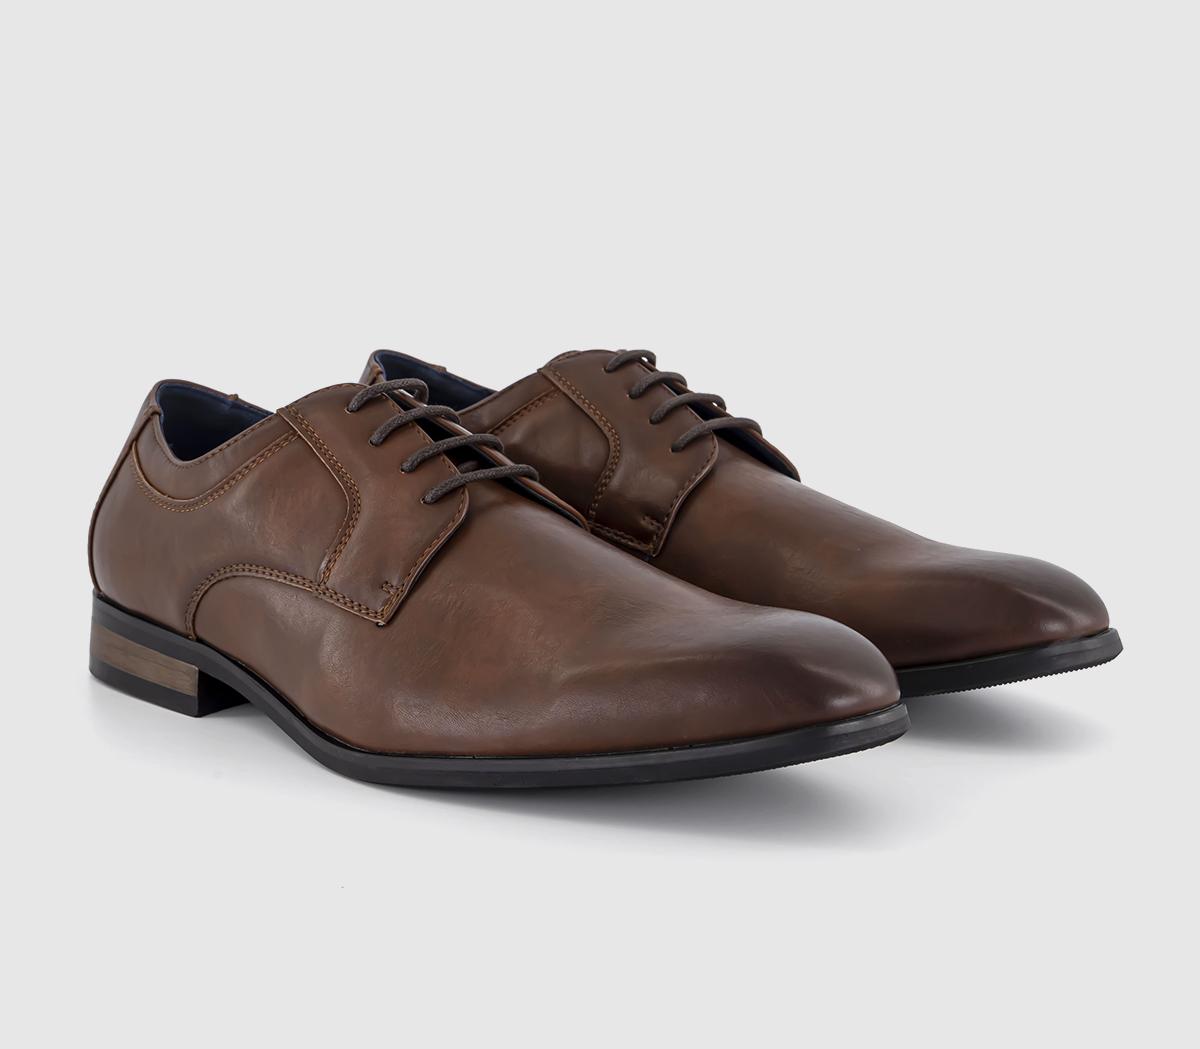 OFFICE Mens Modena Plain Toe Derby Shoes Brown, 11